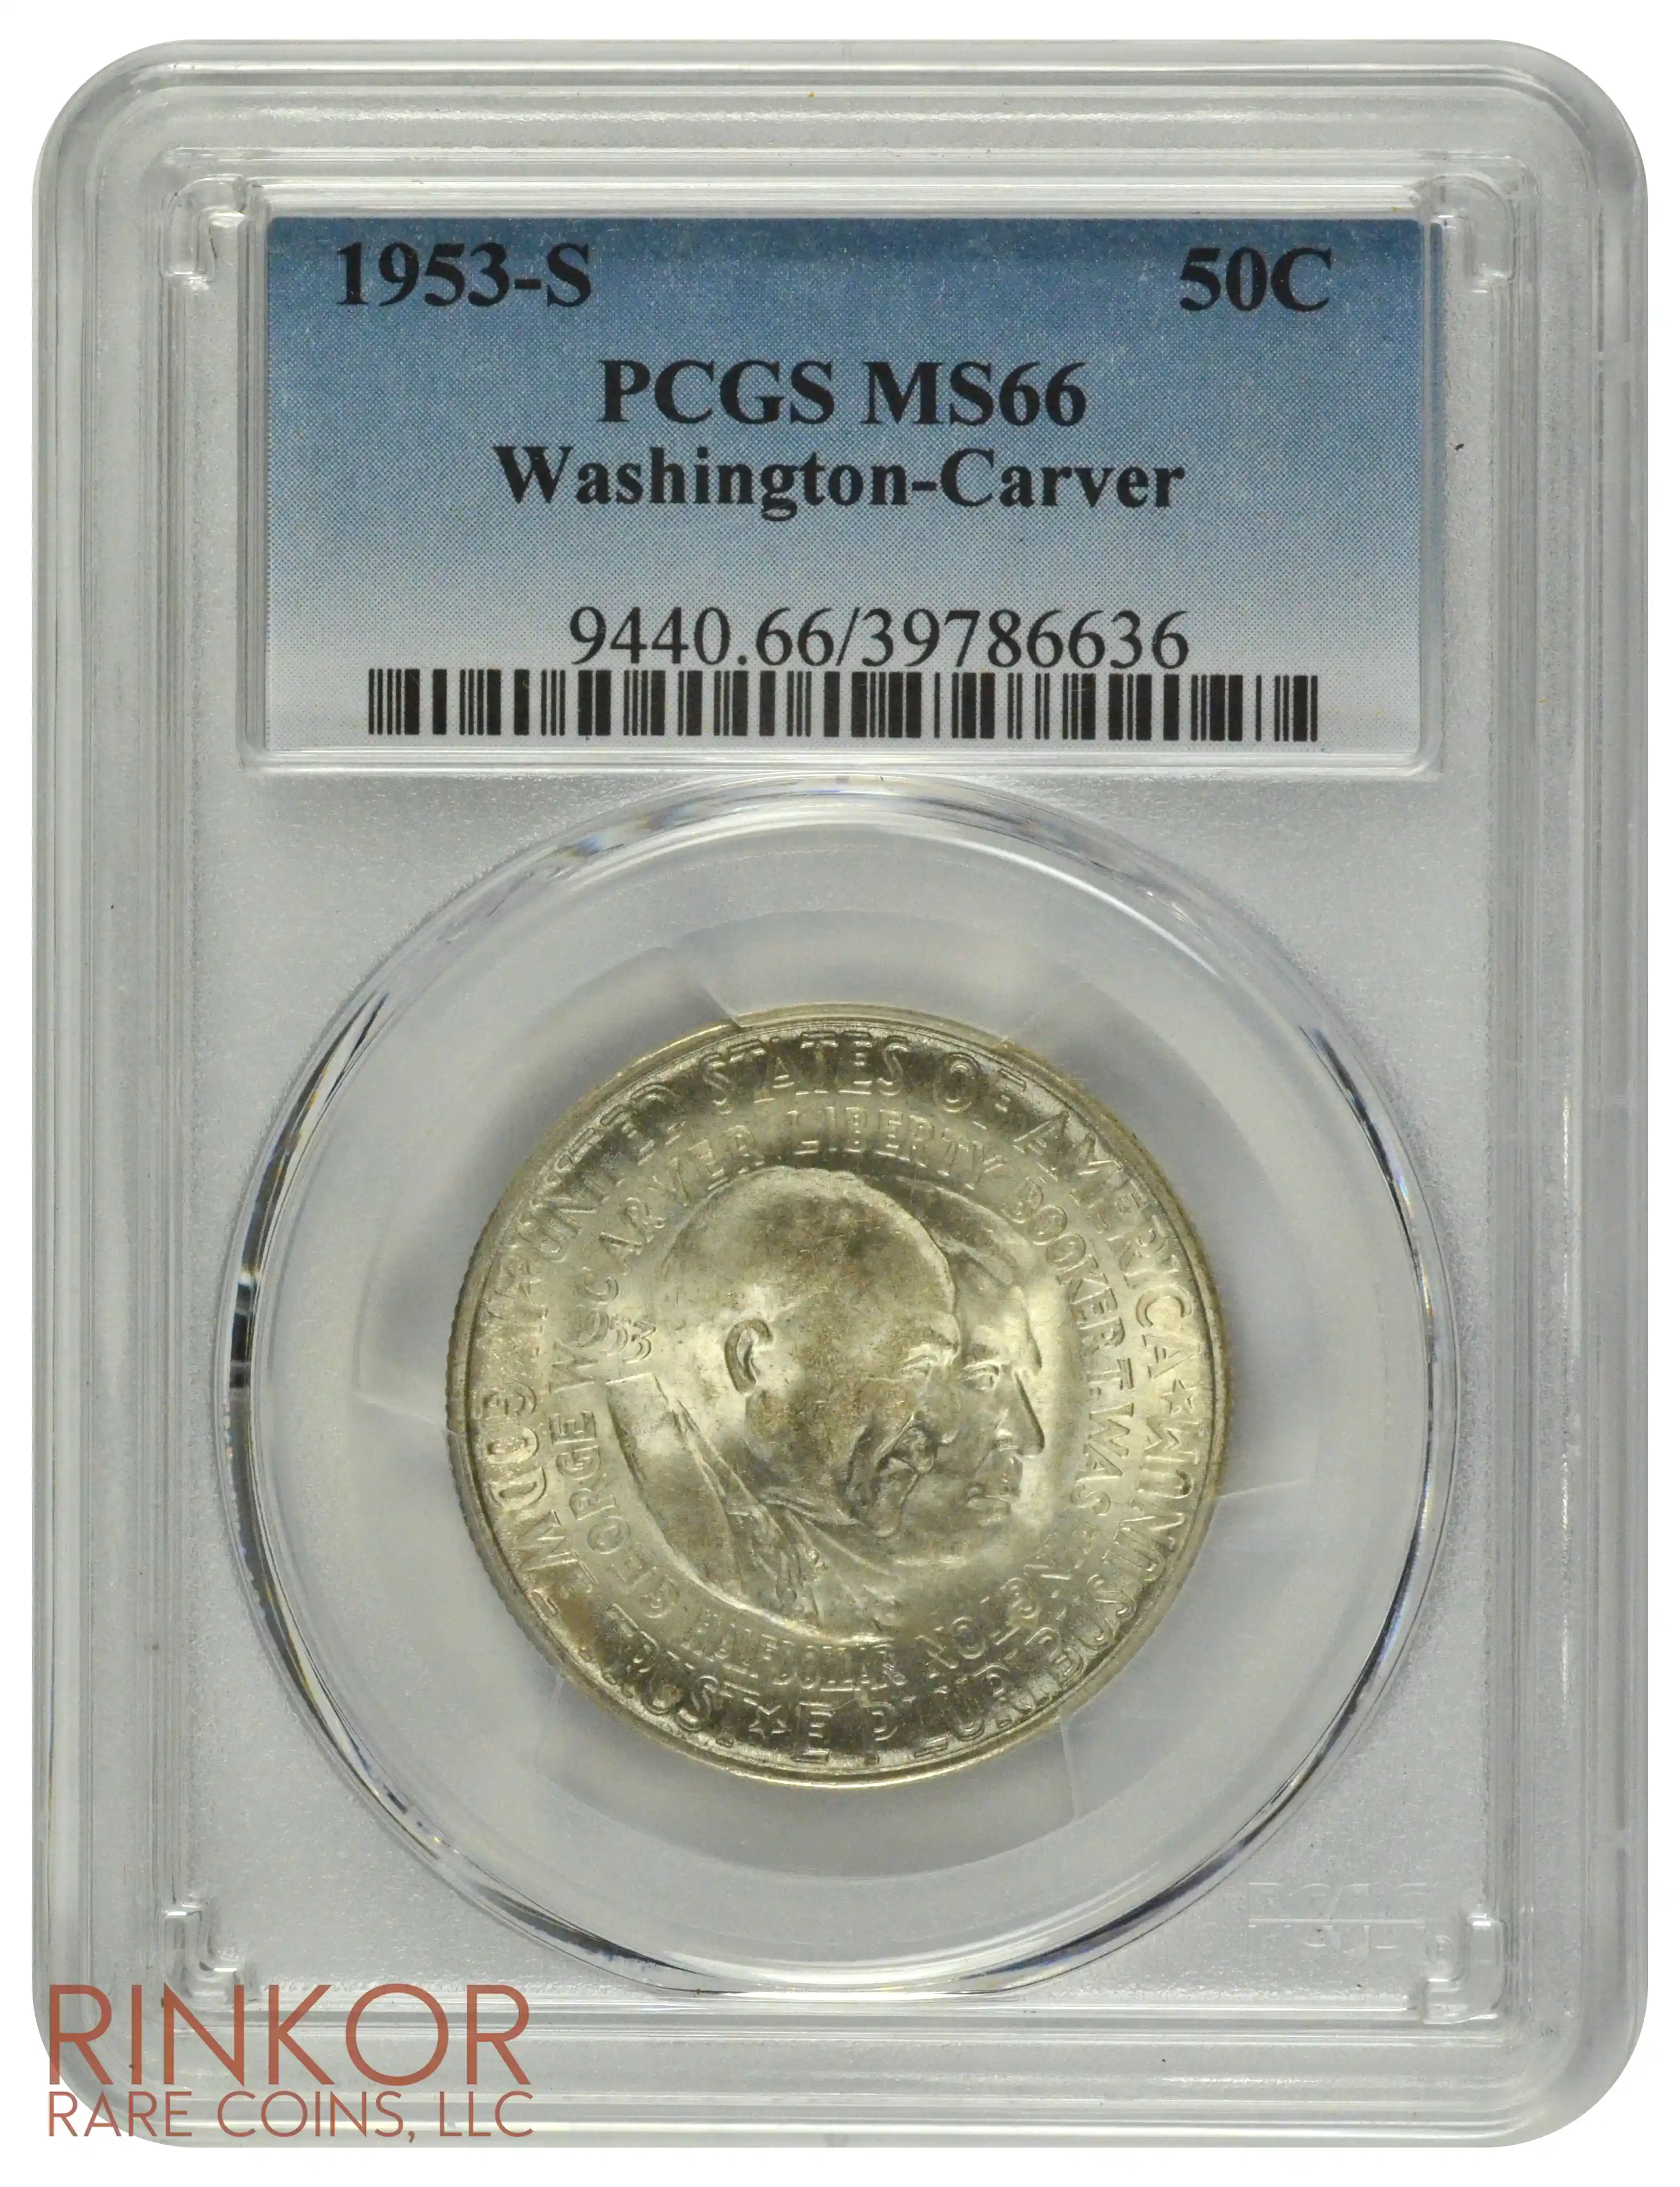 1953-S Washington-Carver Commemorative Half Dollar PCGS MS 66